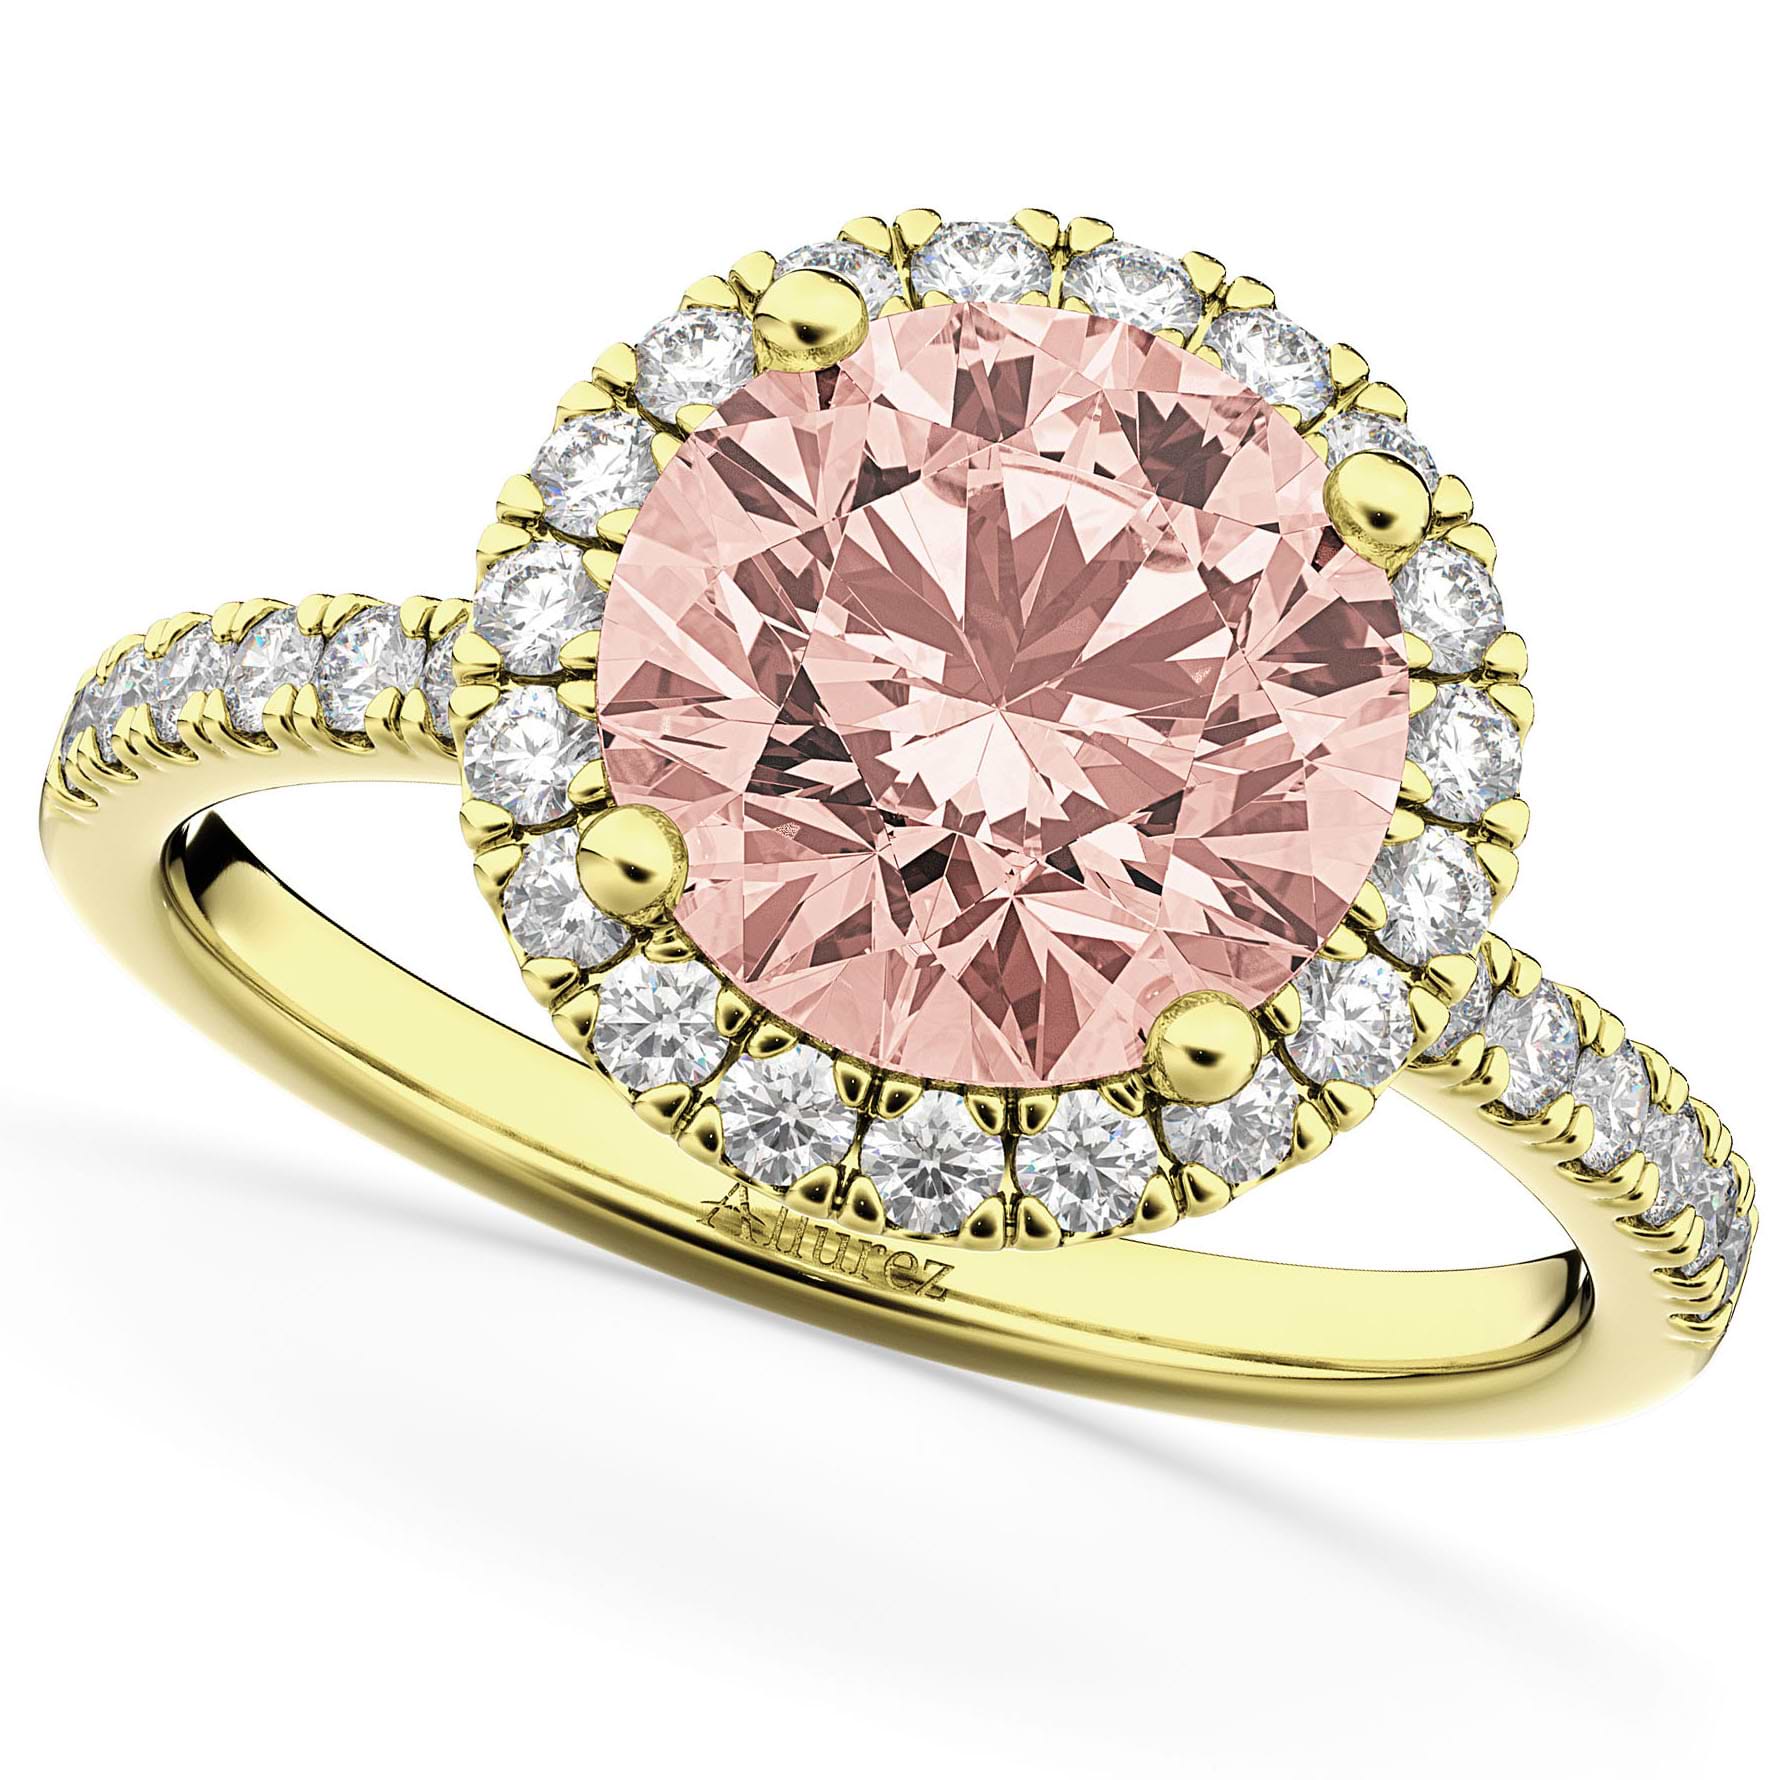 Halo Morganite & Diamond Engagement Ring 18K Yellow Gold 2.25ct